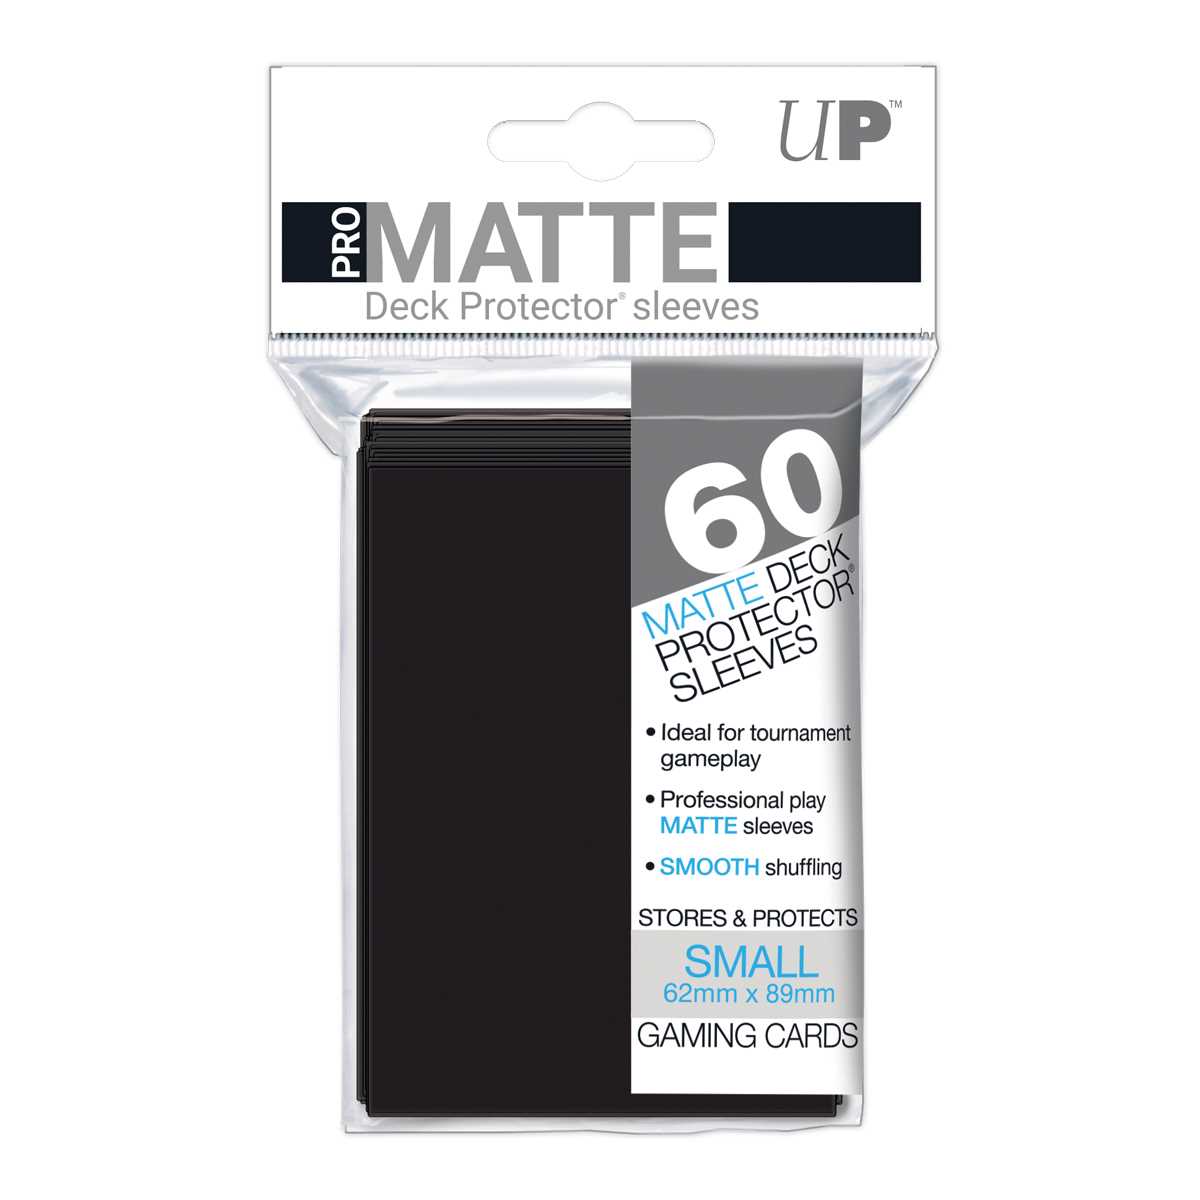 UNIT Pro Matte Small Deck Protectors (60ct) - Black